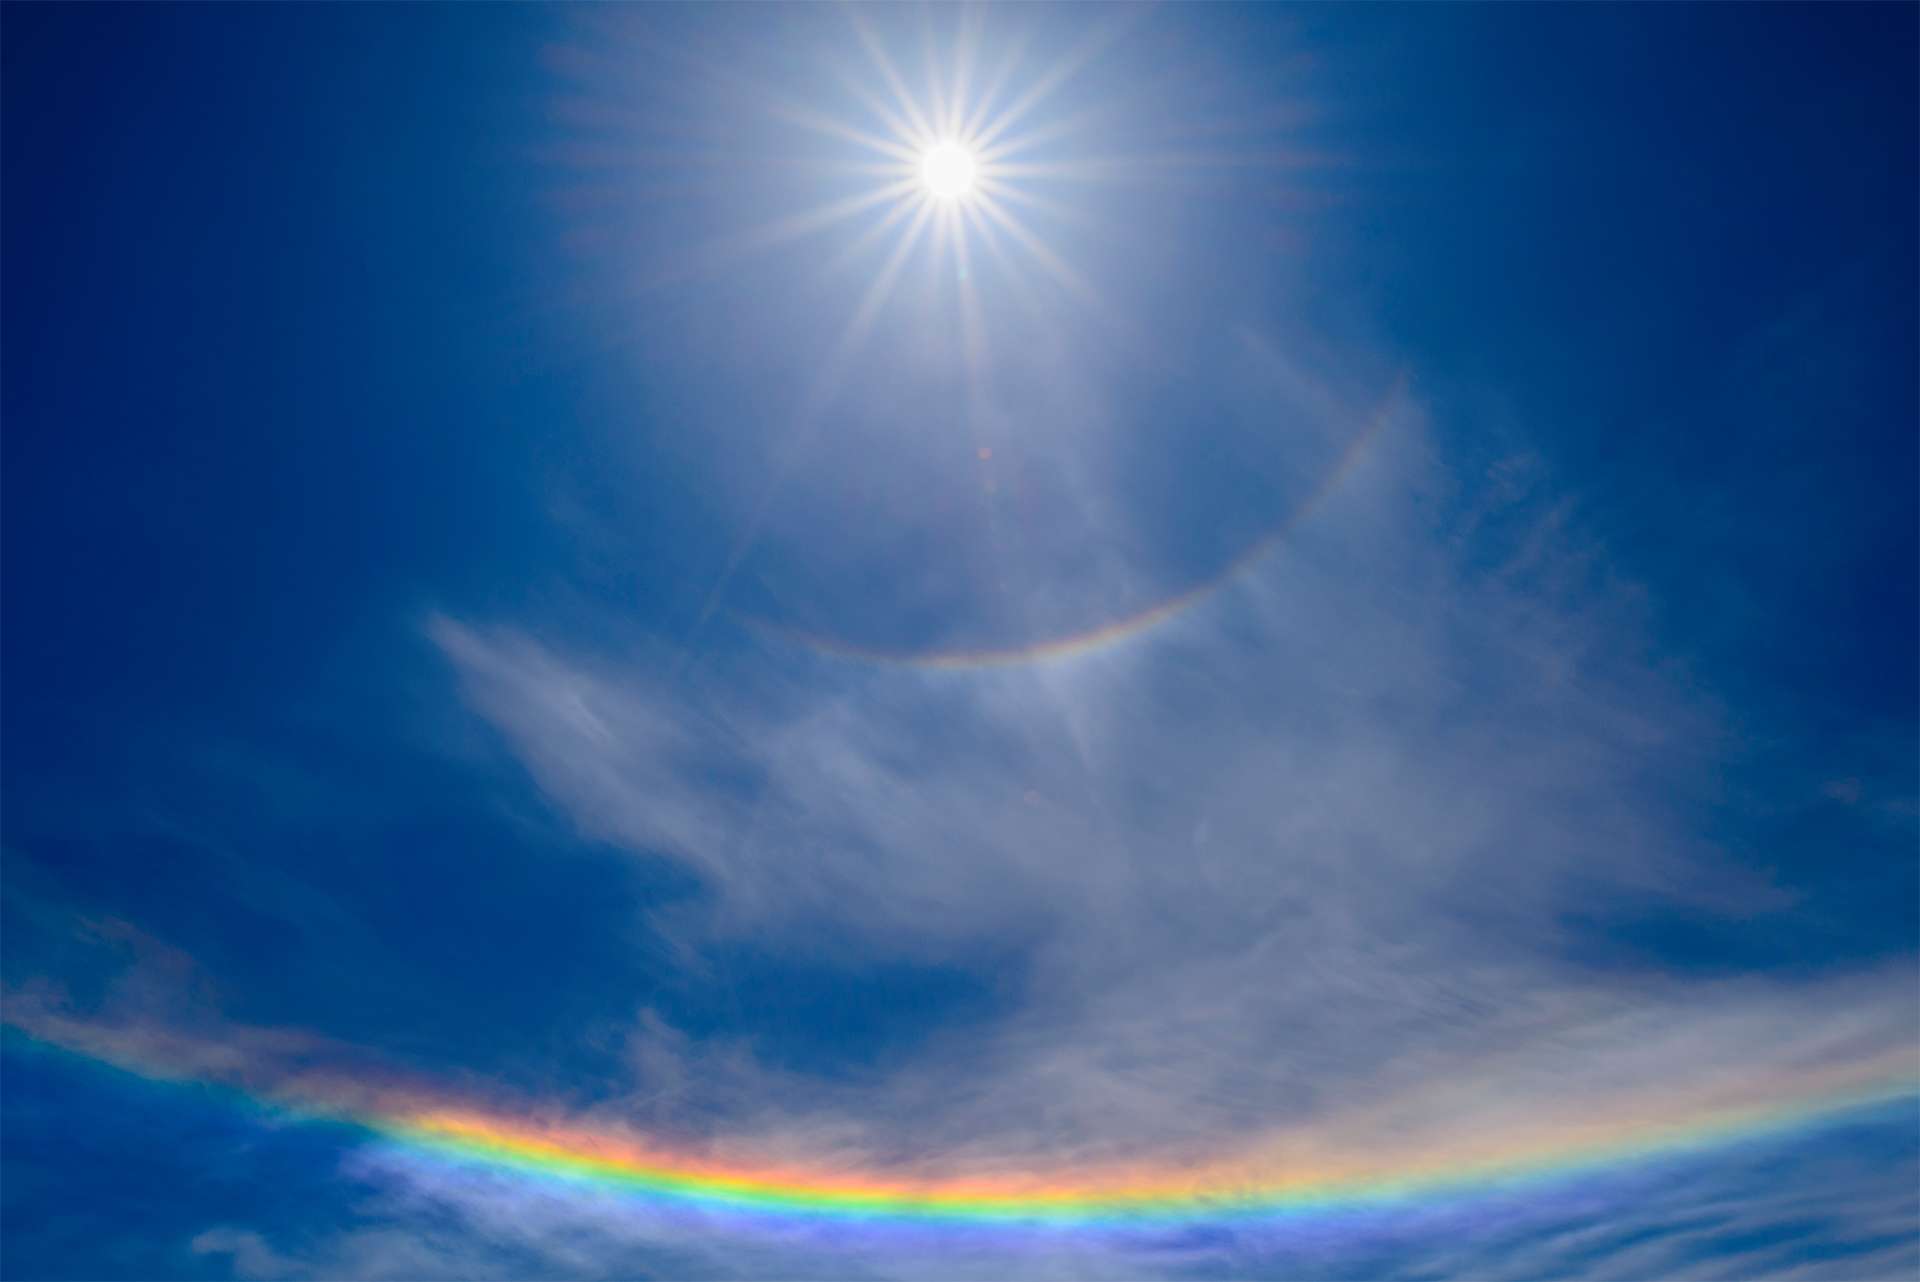 circumhorizon arc and halo fire rainbow